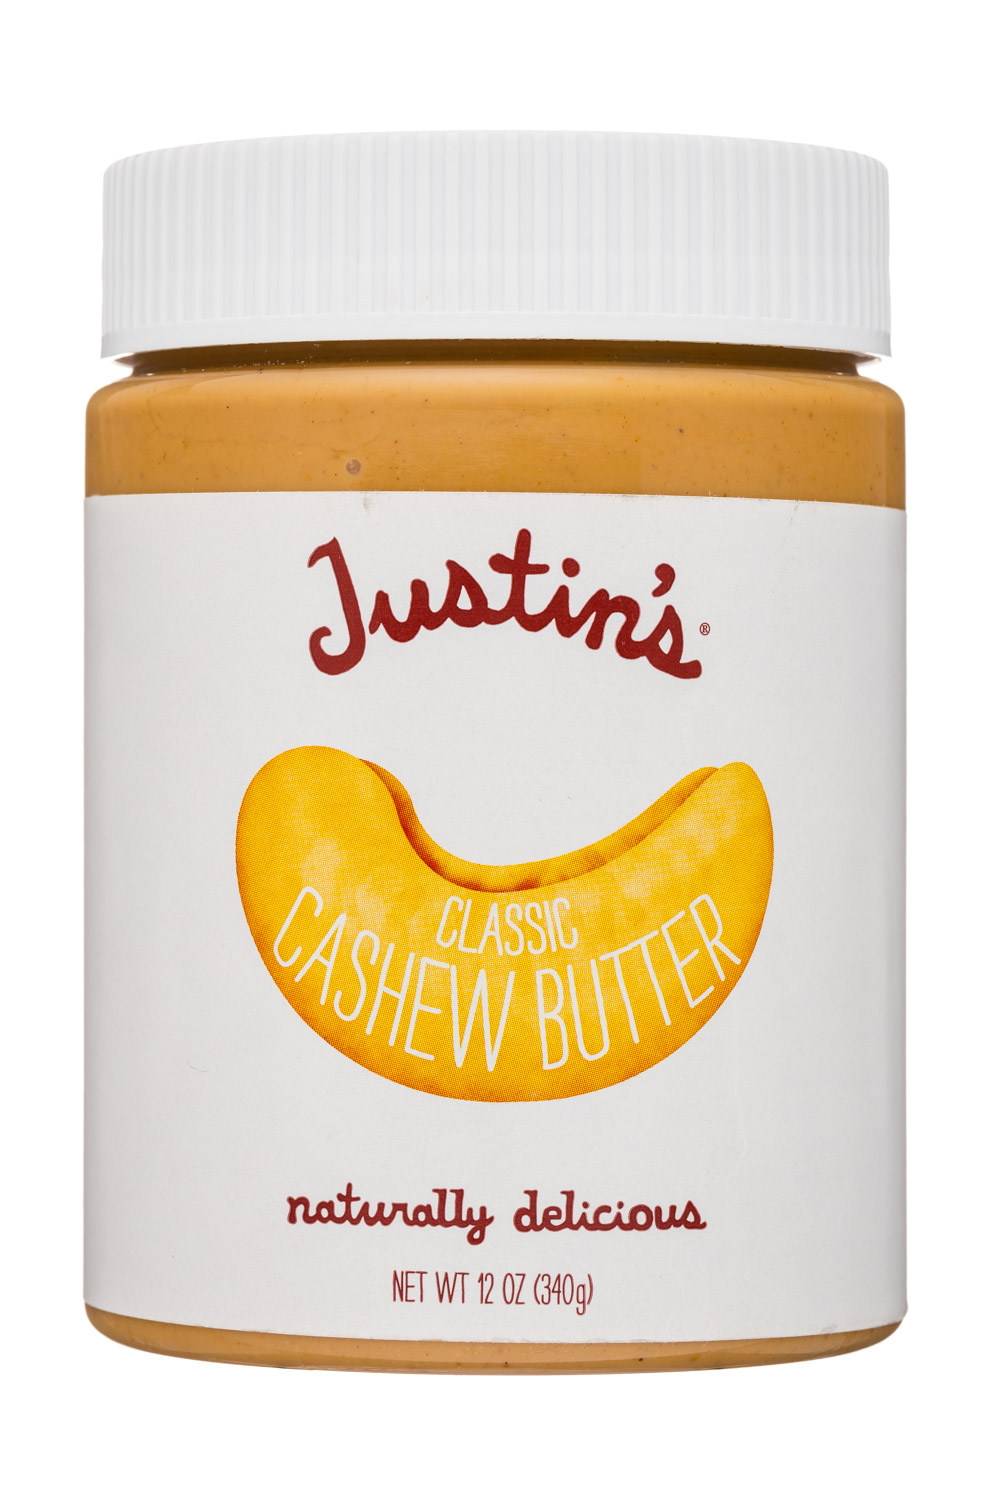 Classic Cashew Butter